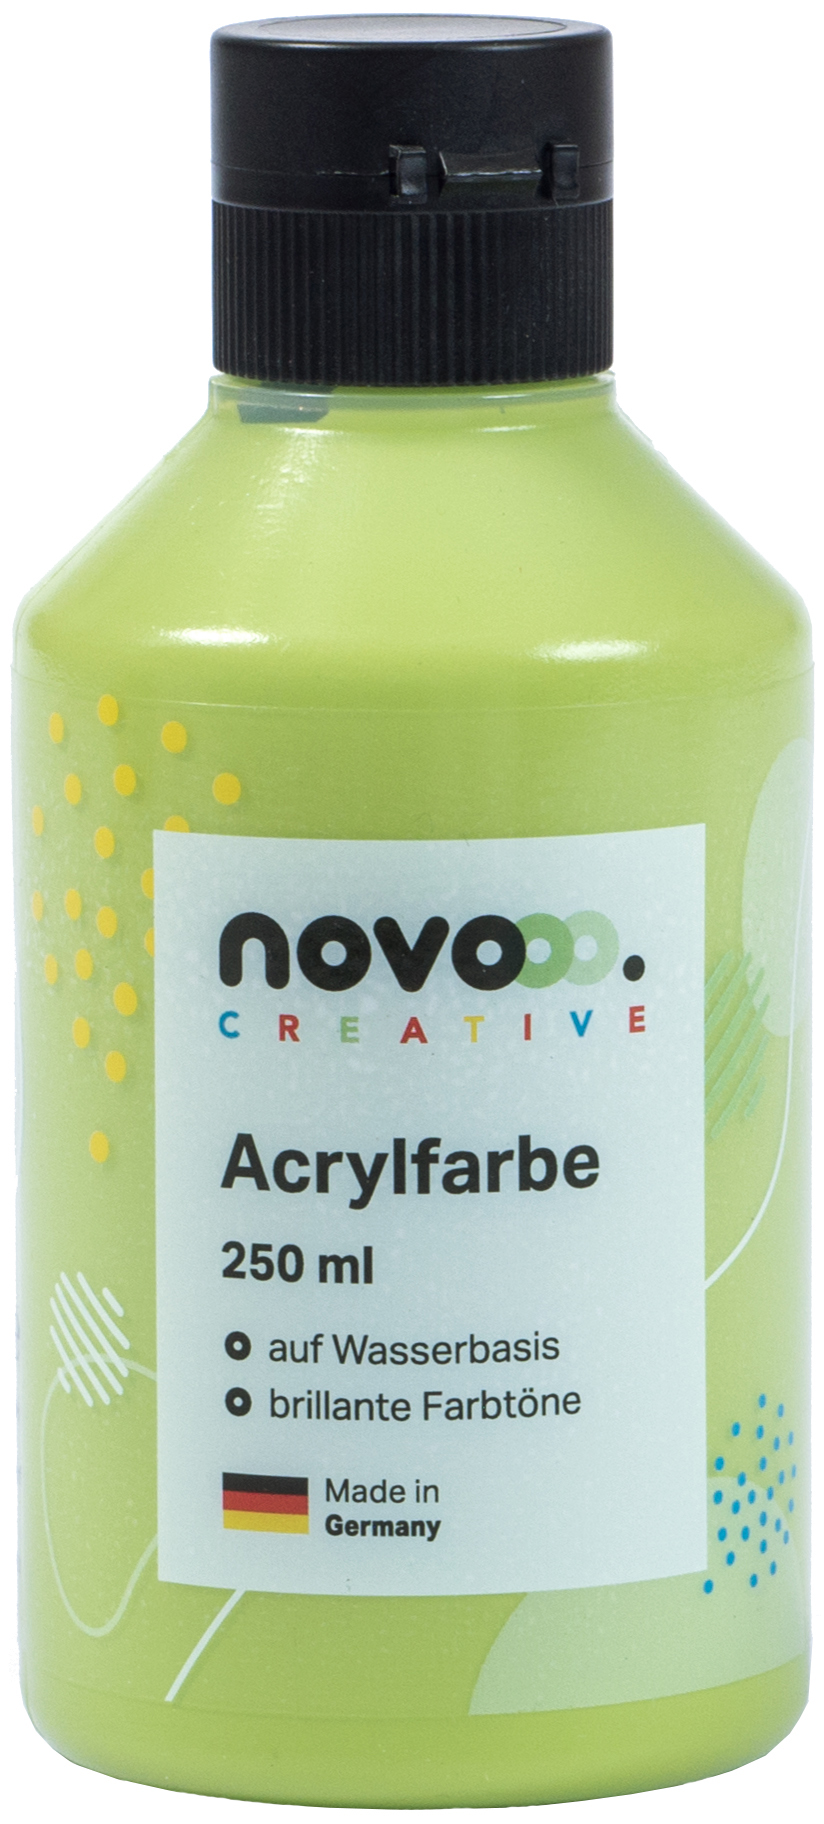 NOVOOO Creative Acrylfarbe 250 ml blattgrün